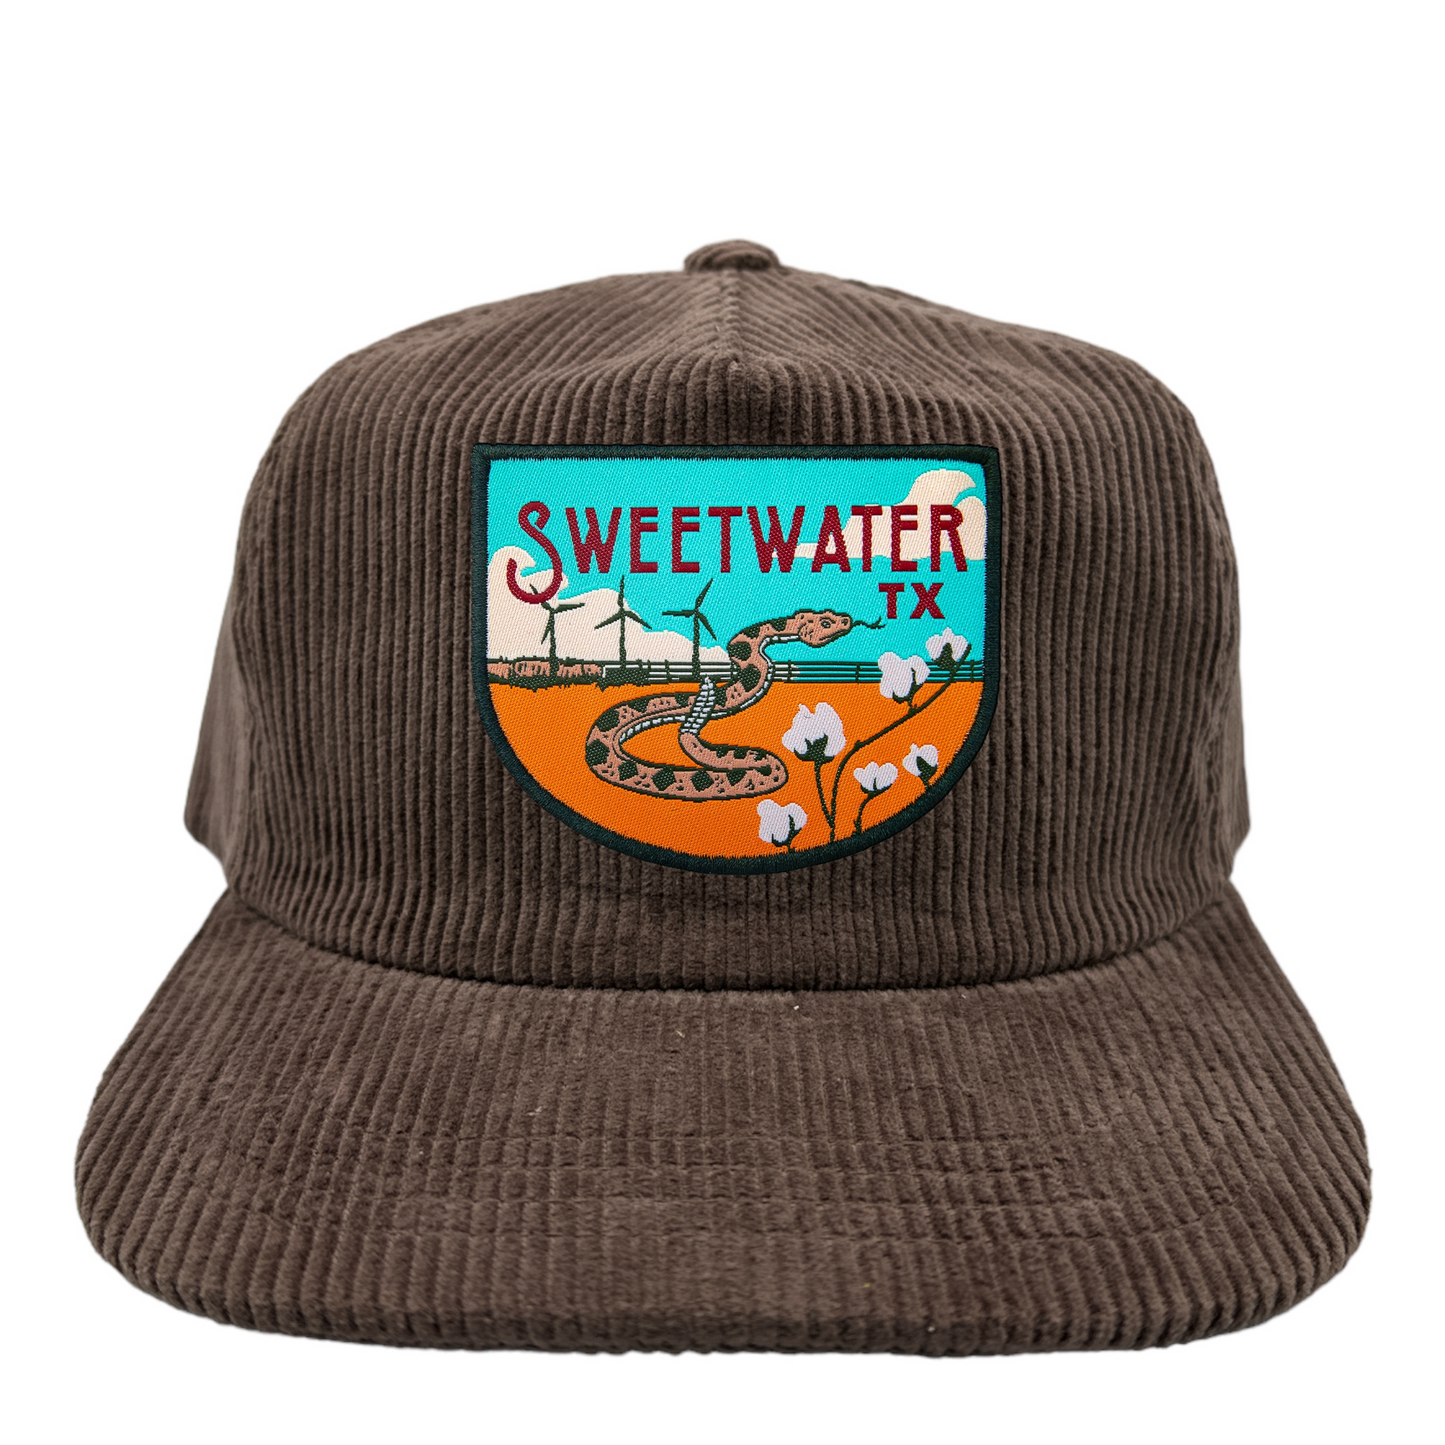 Sweetwater, TX Corduroy Snapback